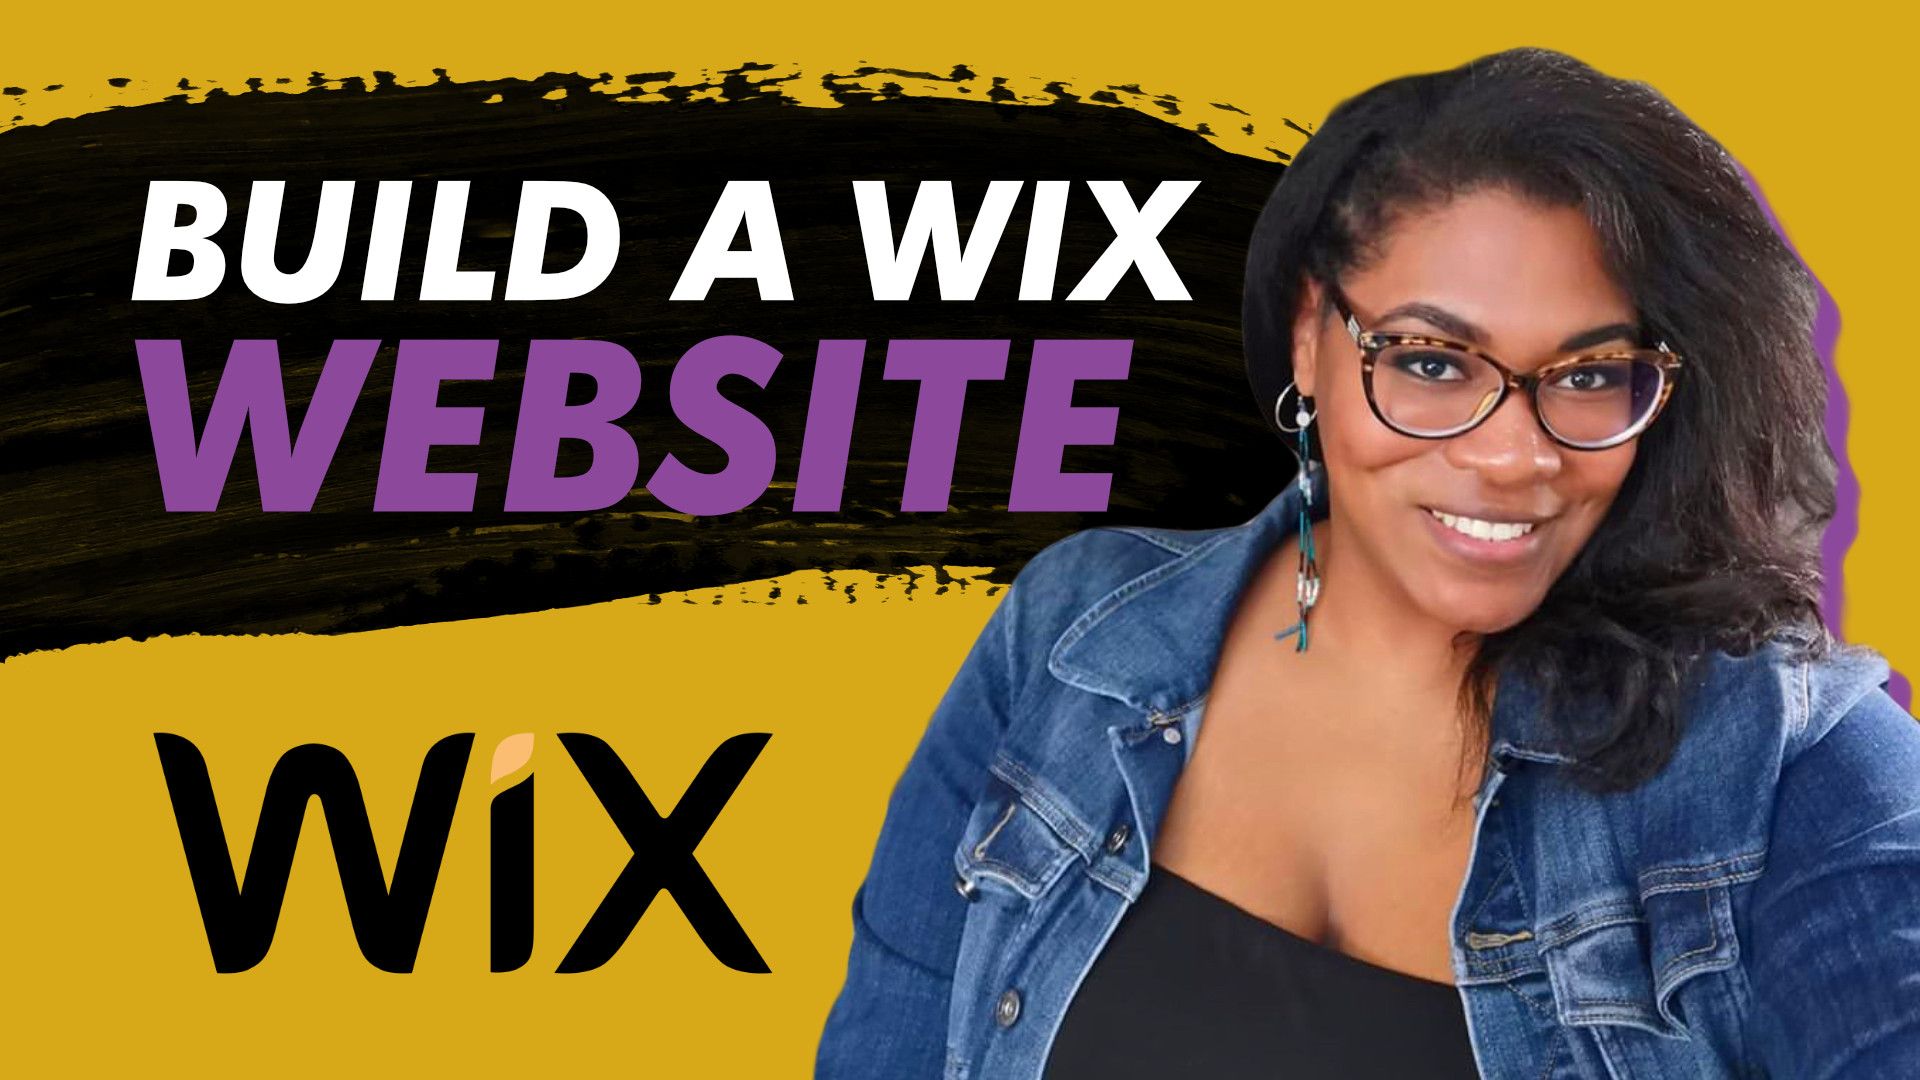 Building a Wix Website